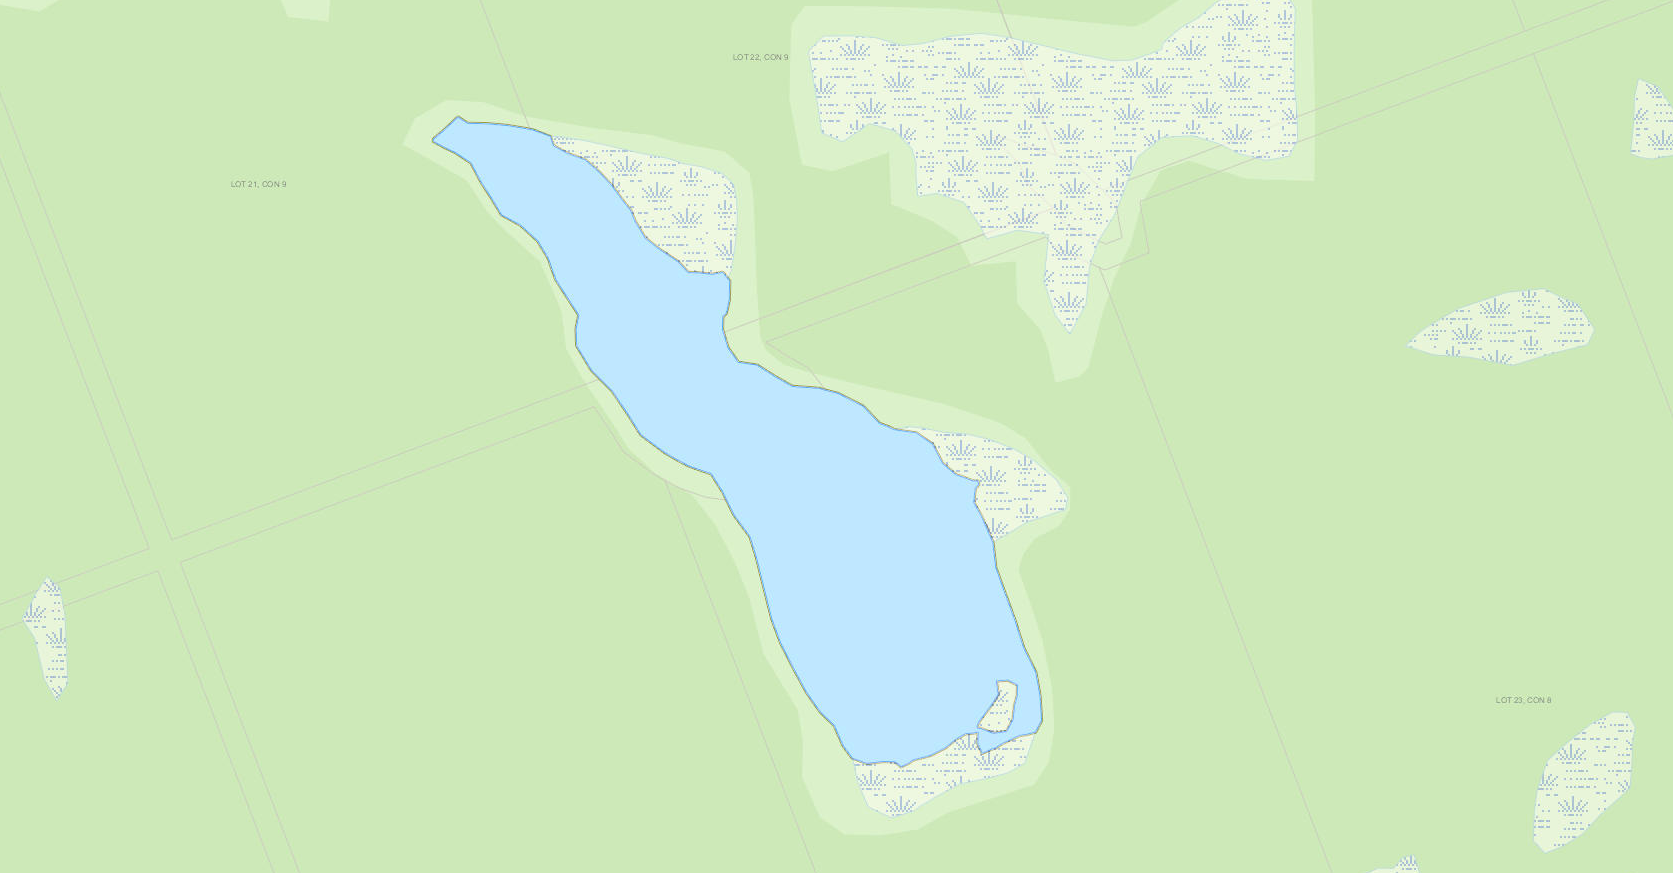 Beast Lake Cadastral Map - Beast Lake - Muskoka